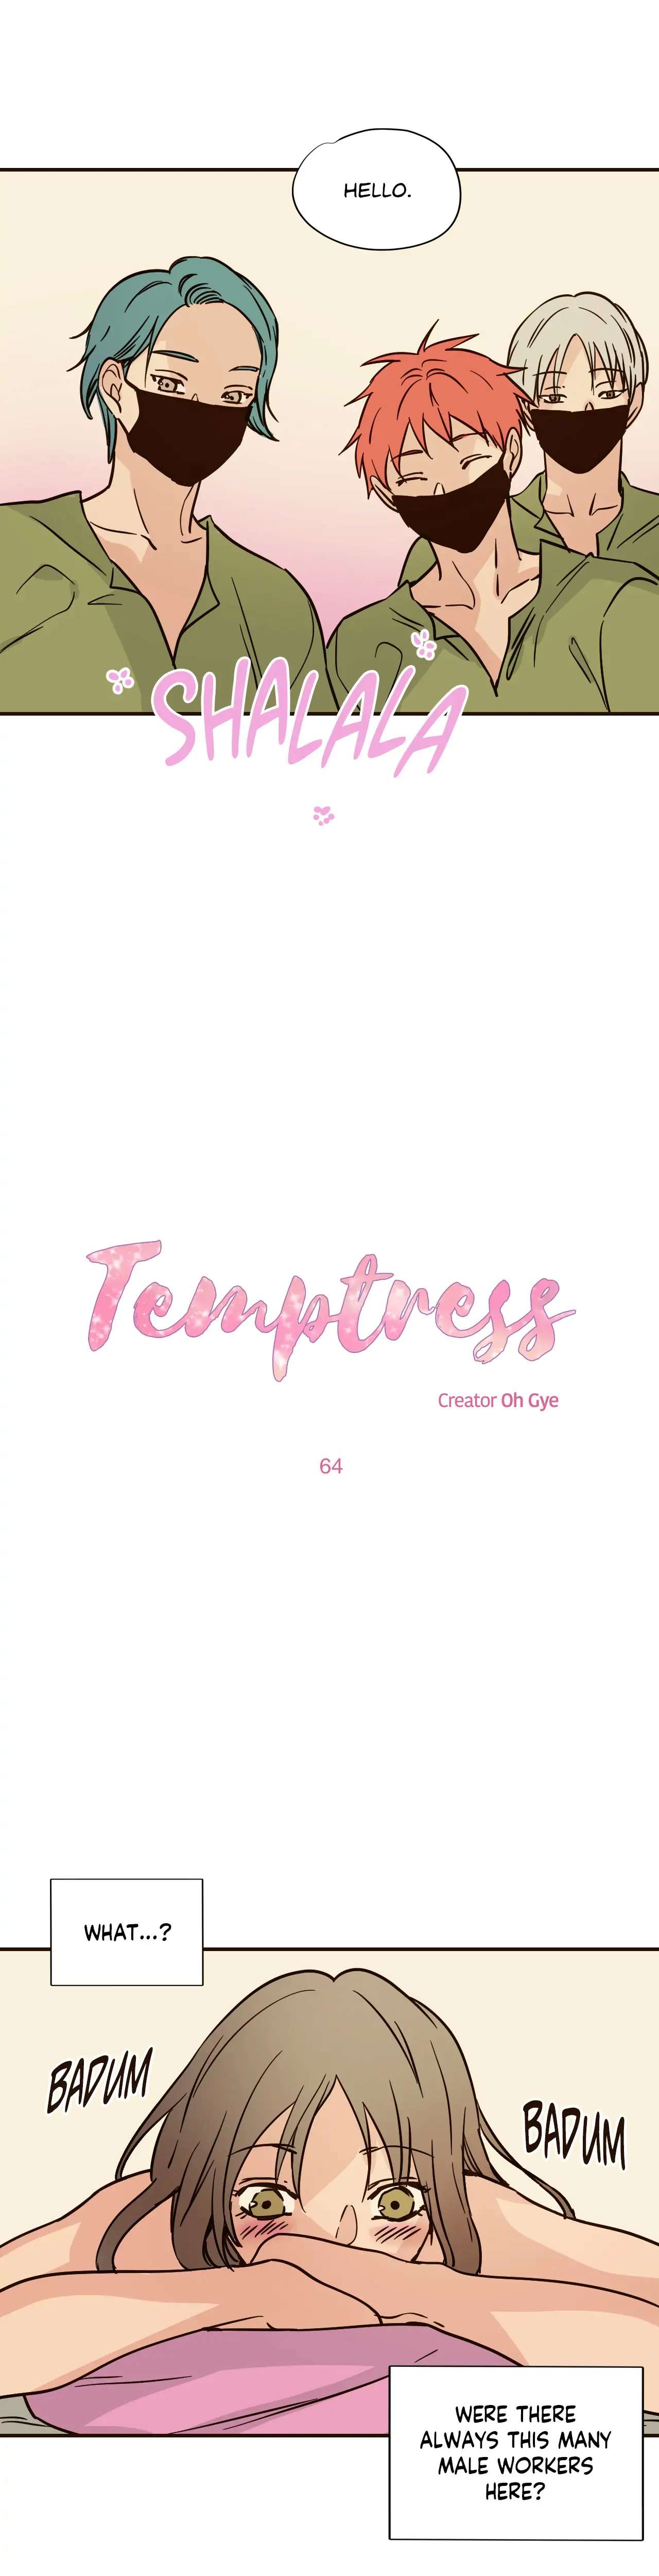 Temptress - Page 2